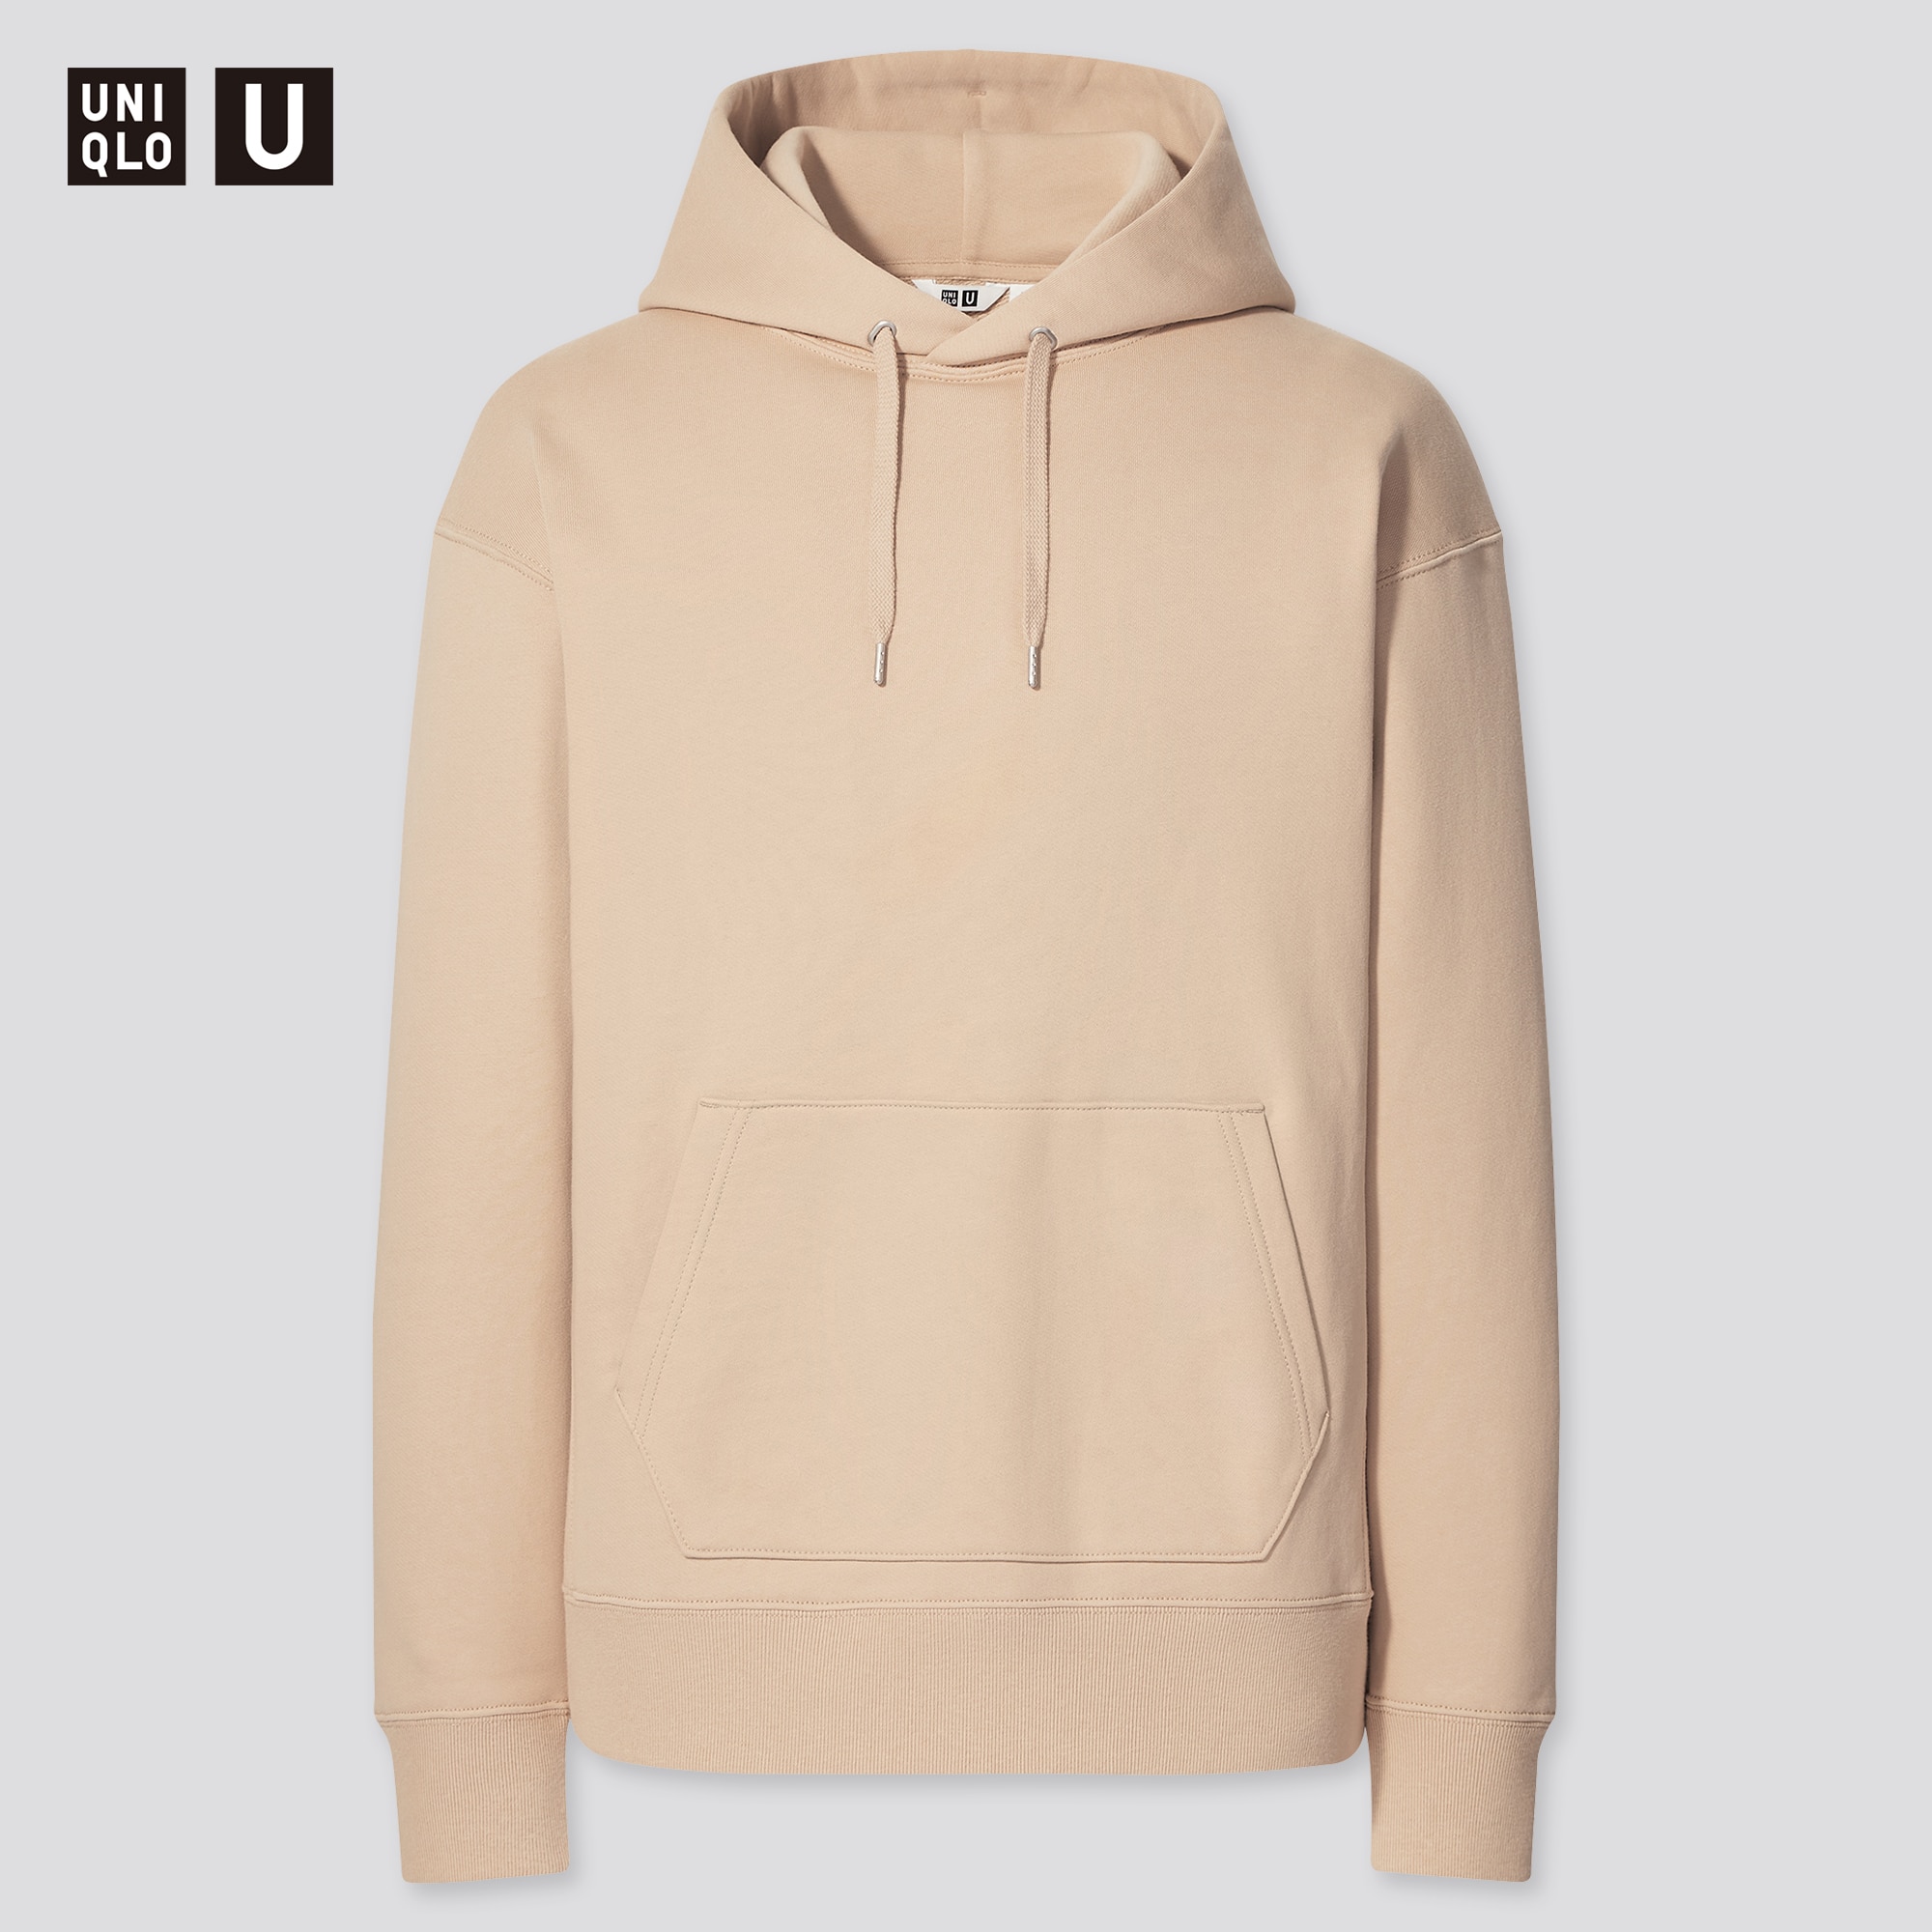 Uniqlo U boxy drawstring pullover hoodie beige brown Size XL Heavy Sturdy   eBay